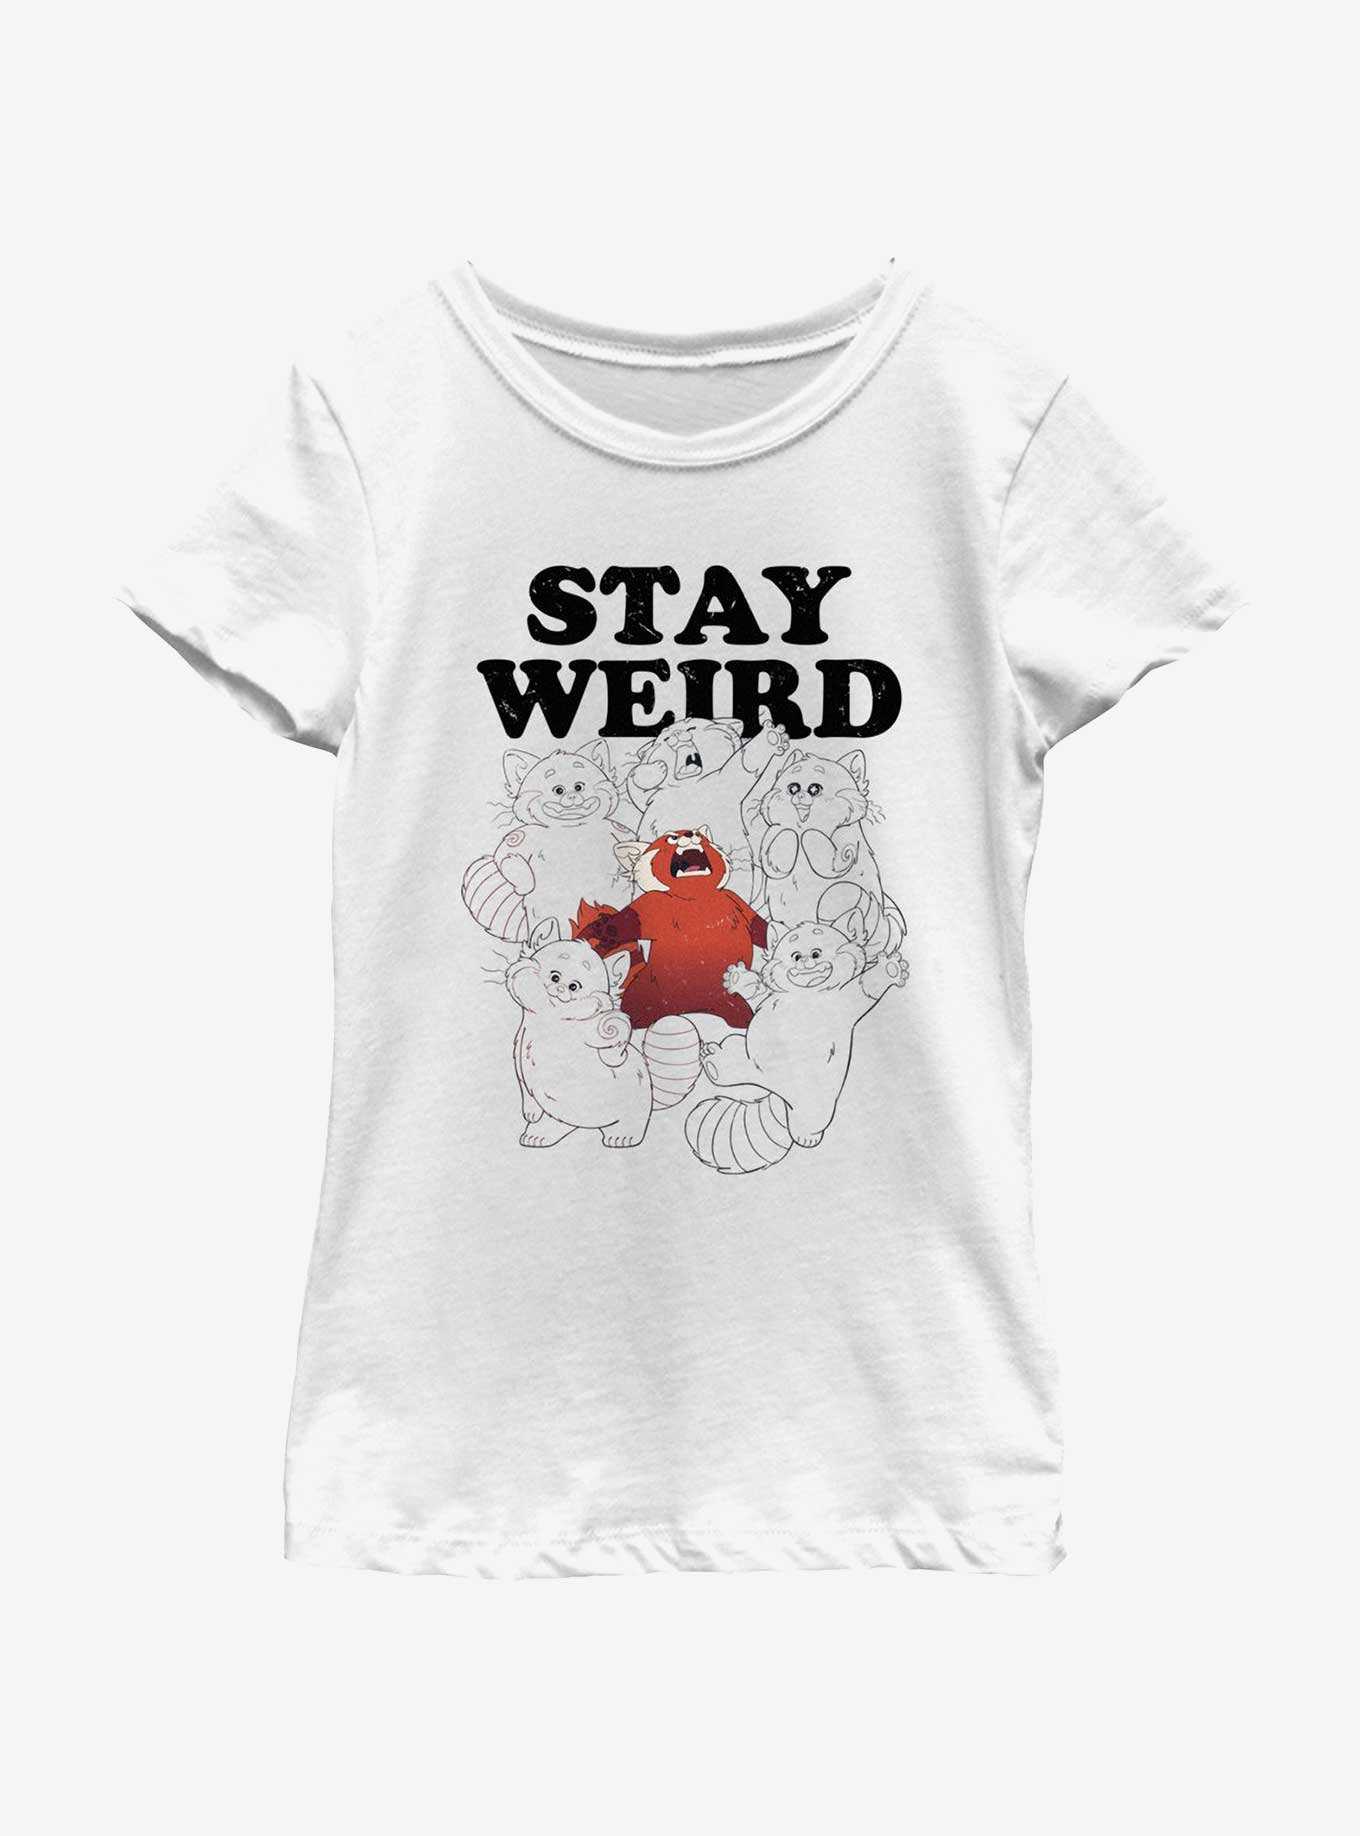 Disney Pixar Turning Red Stay Weird Youth Girls T-Shirt, , hi-res